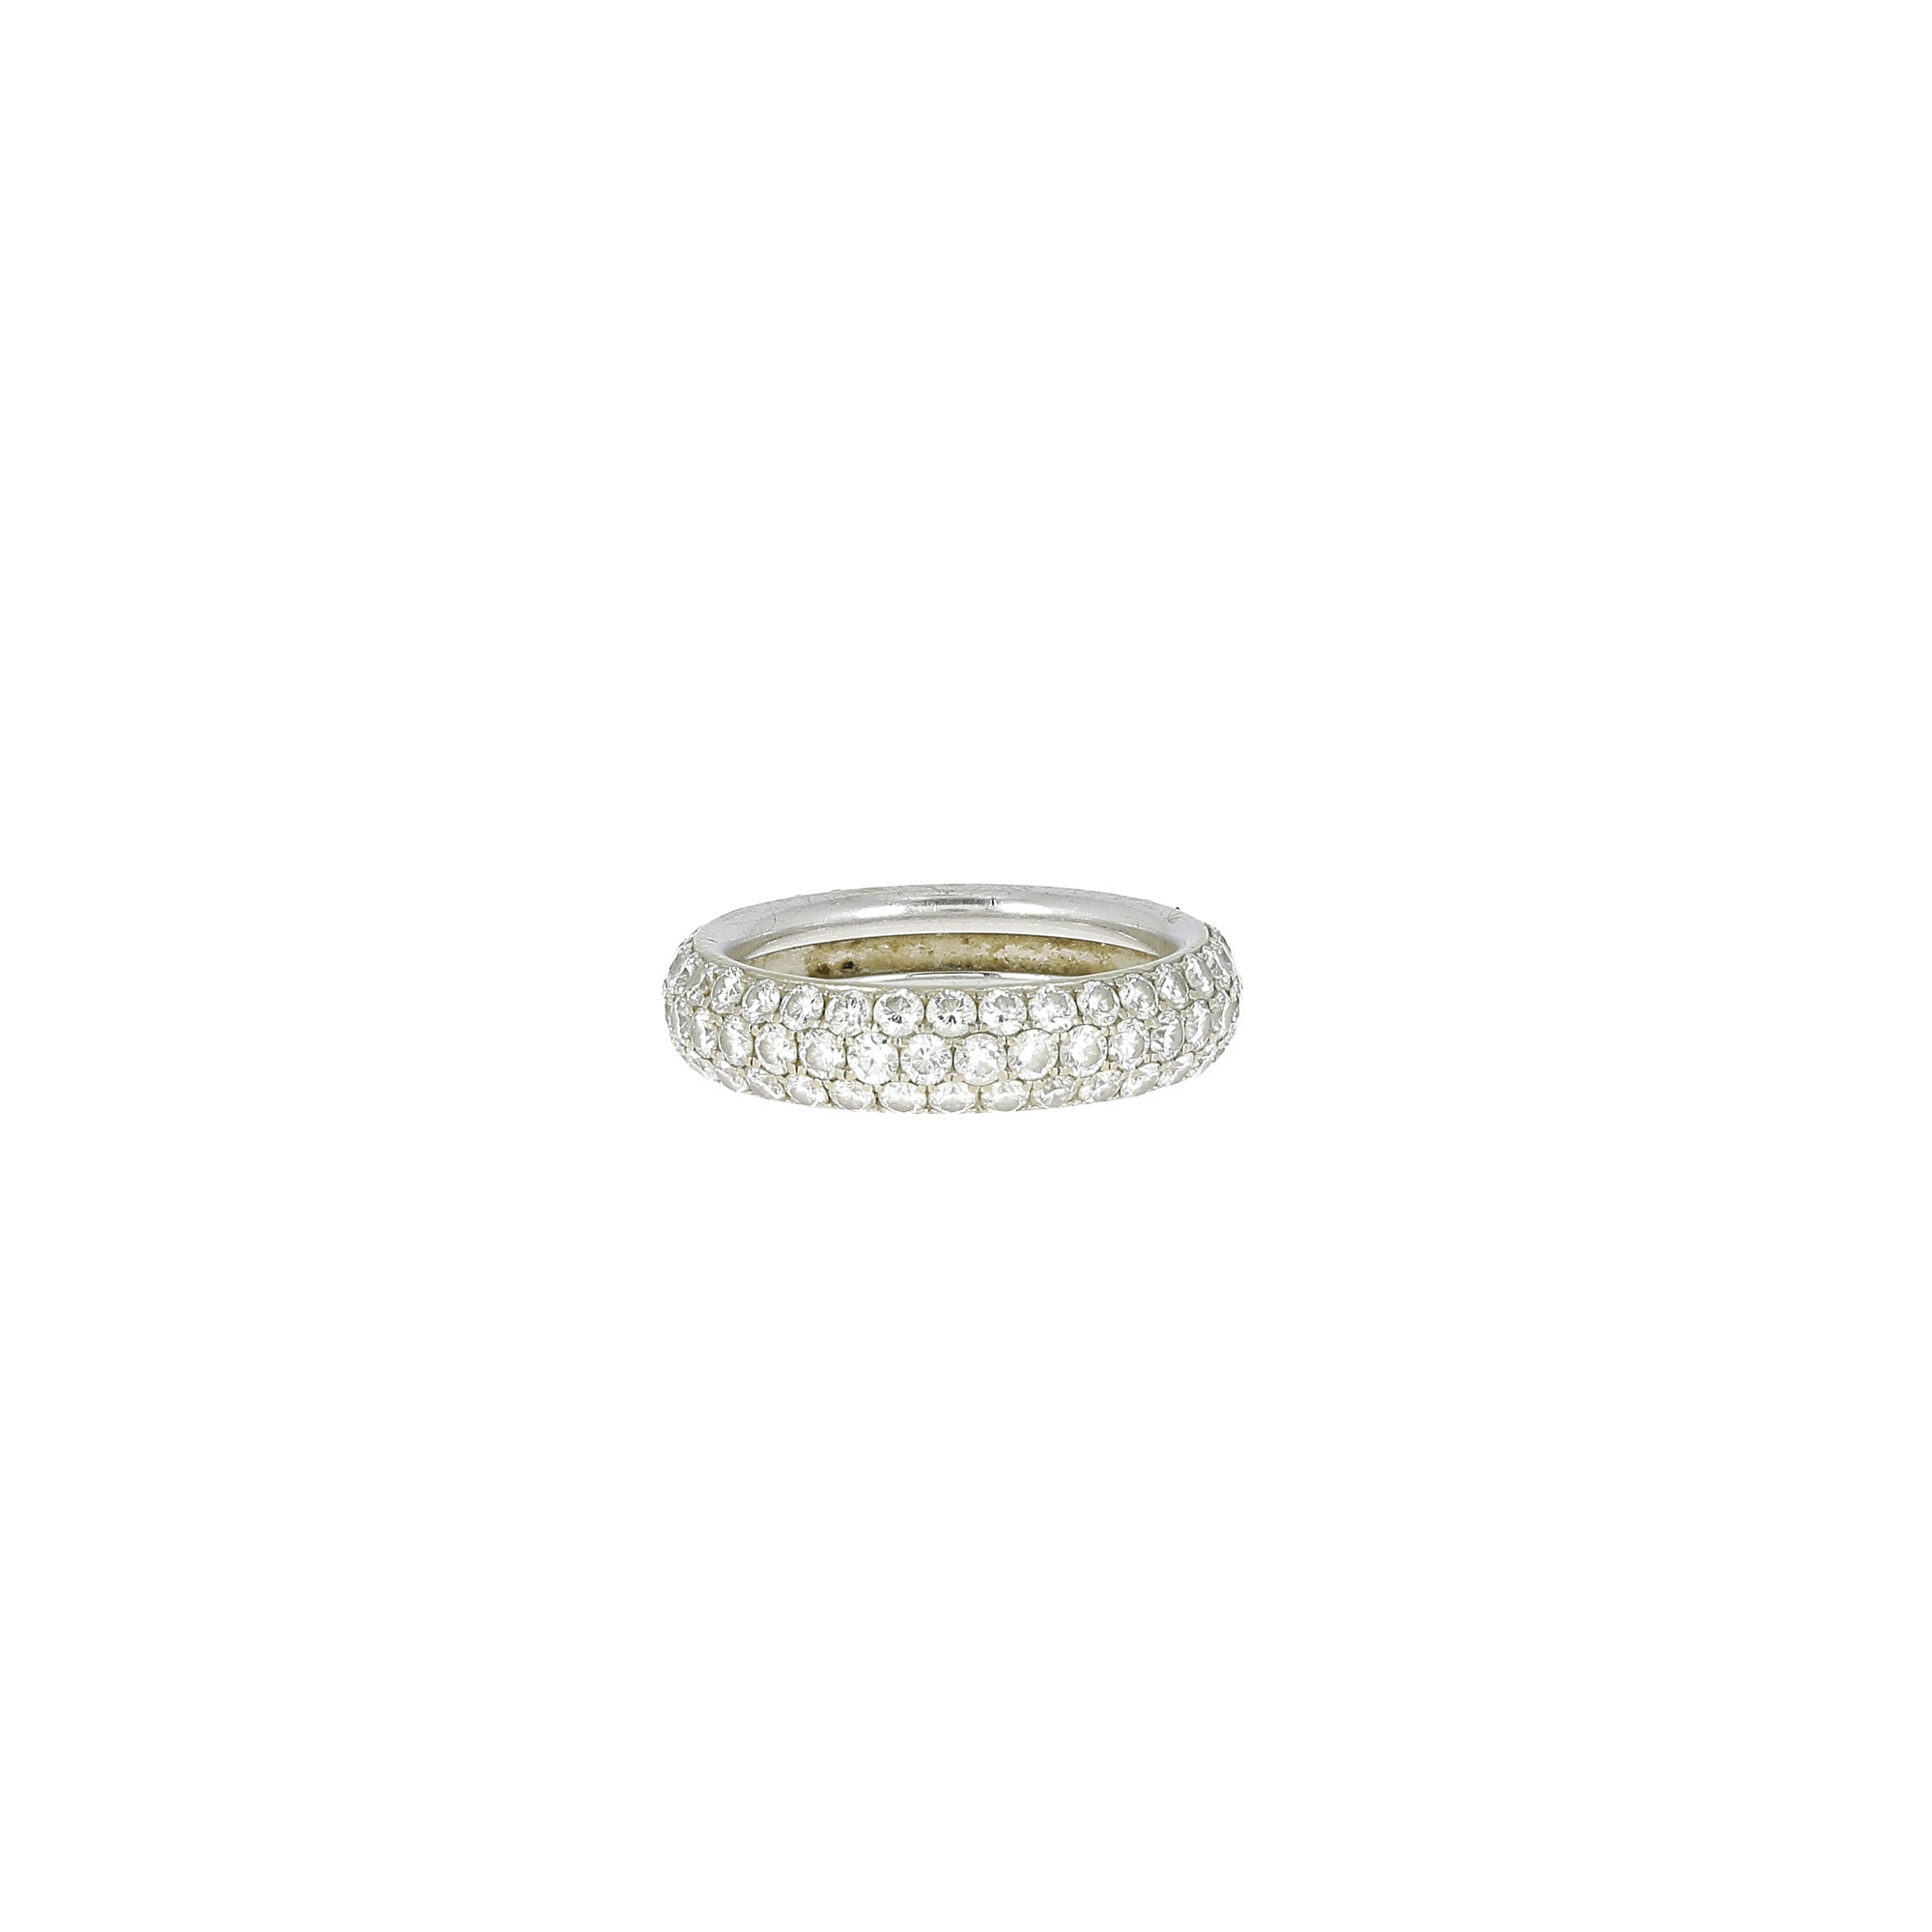 Lionel Meylan White Gold 3 Row Diamond Ring